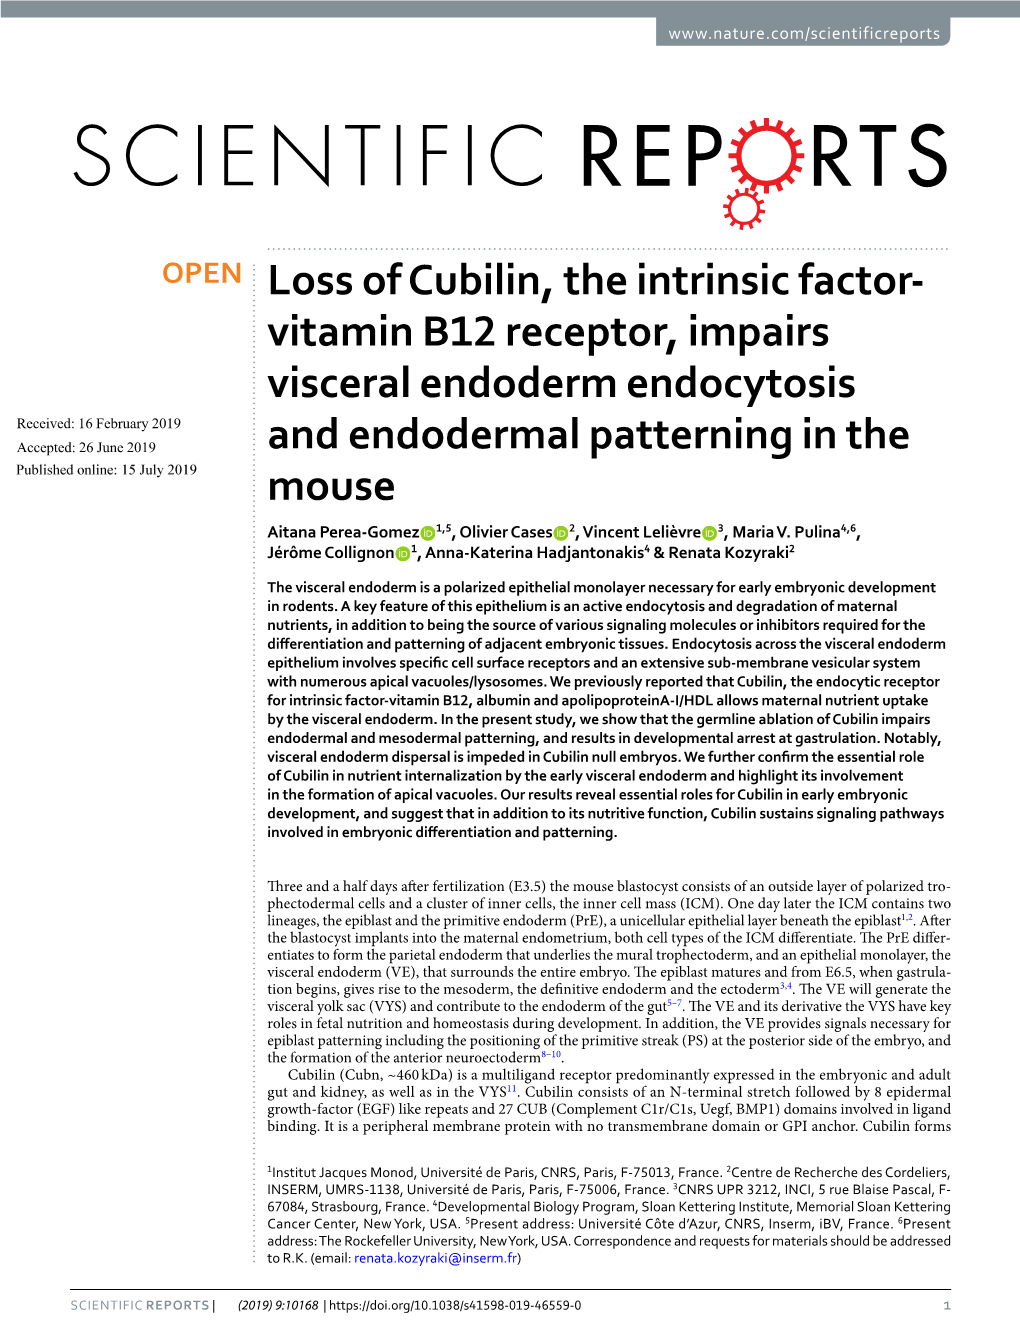 Loss of Cubilin, the Intrinsic Factor-Vitamin B12 Receptor, Impairs